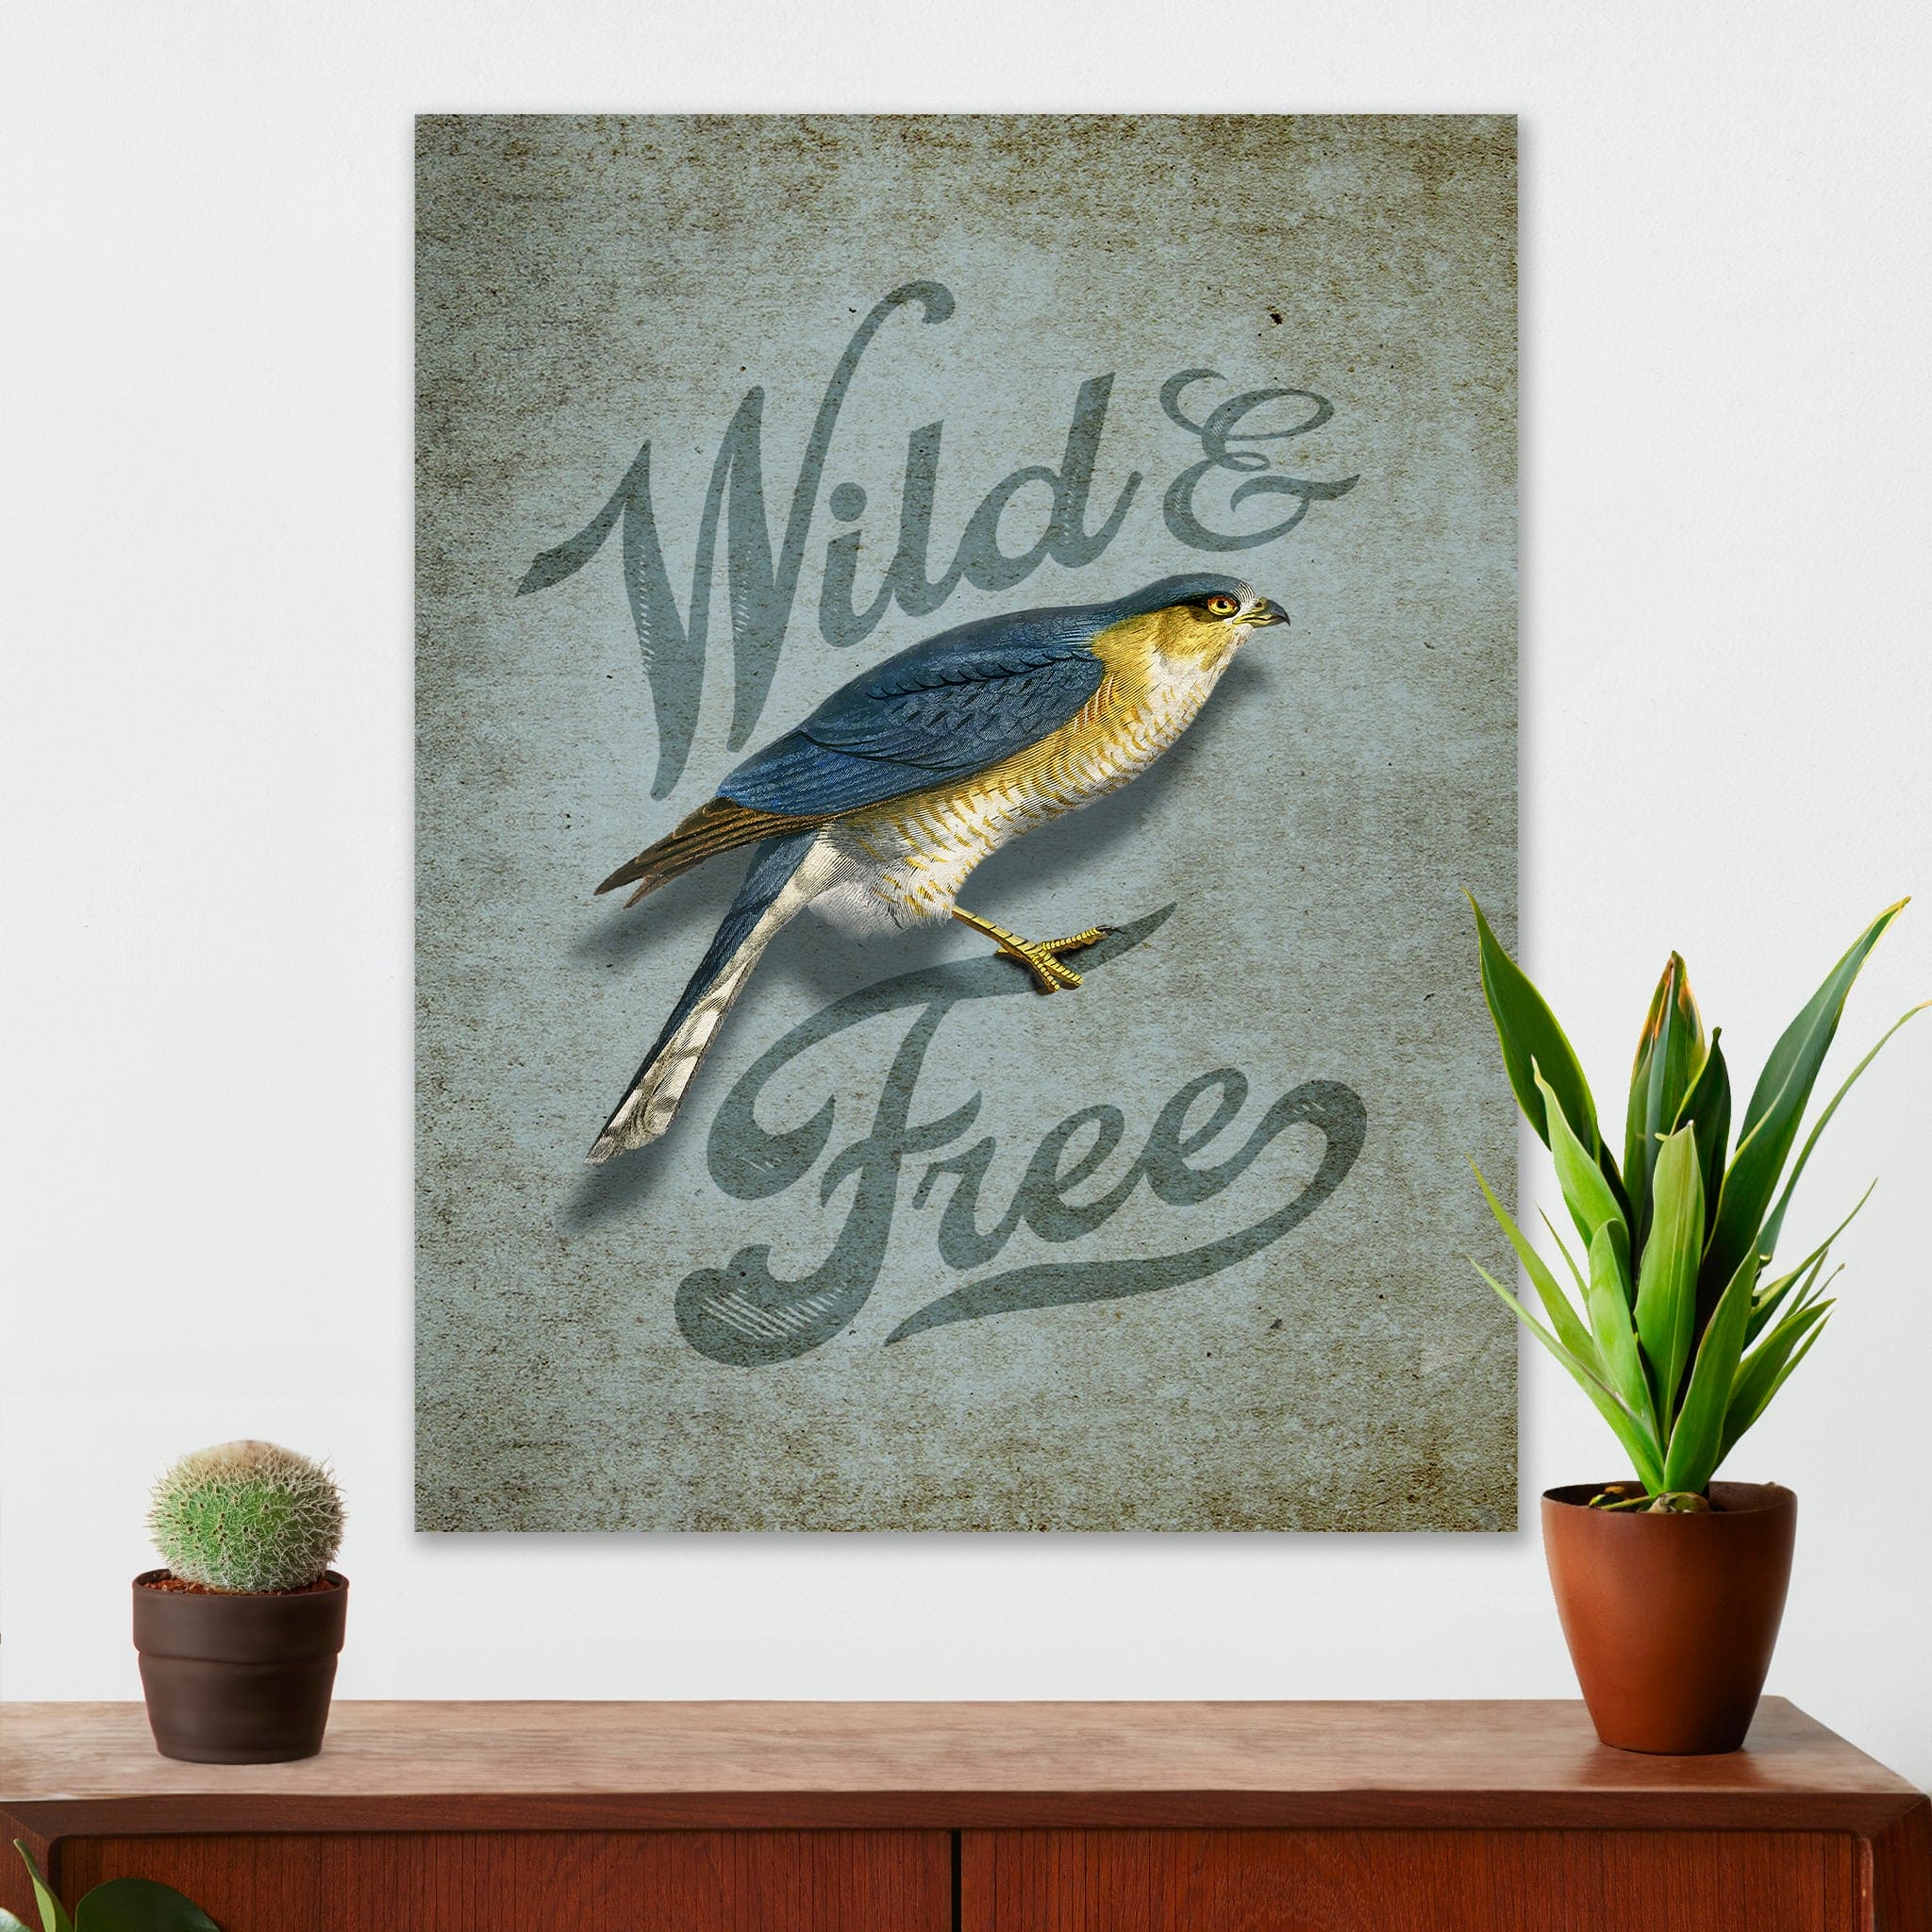 Wildlife Wall Decor - Wild & Free - Canvas Sign